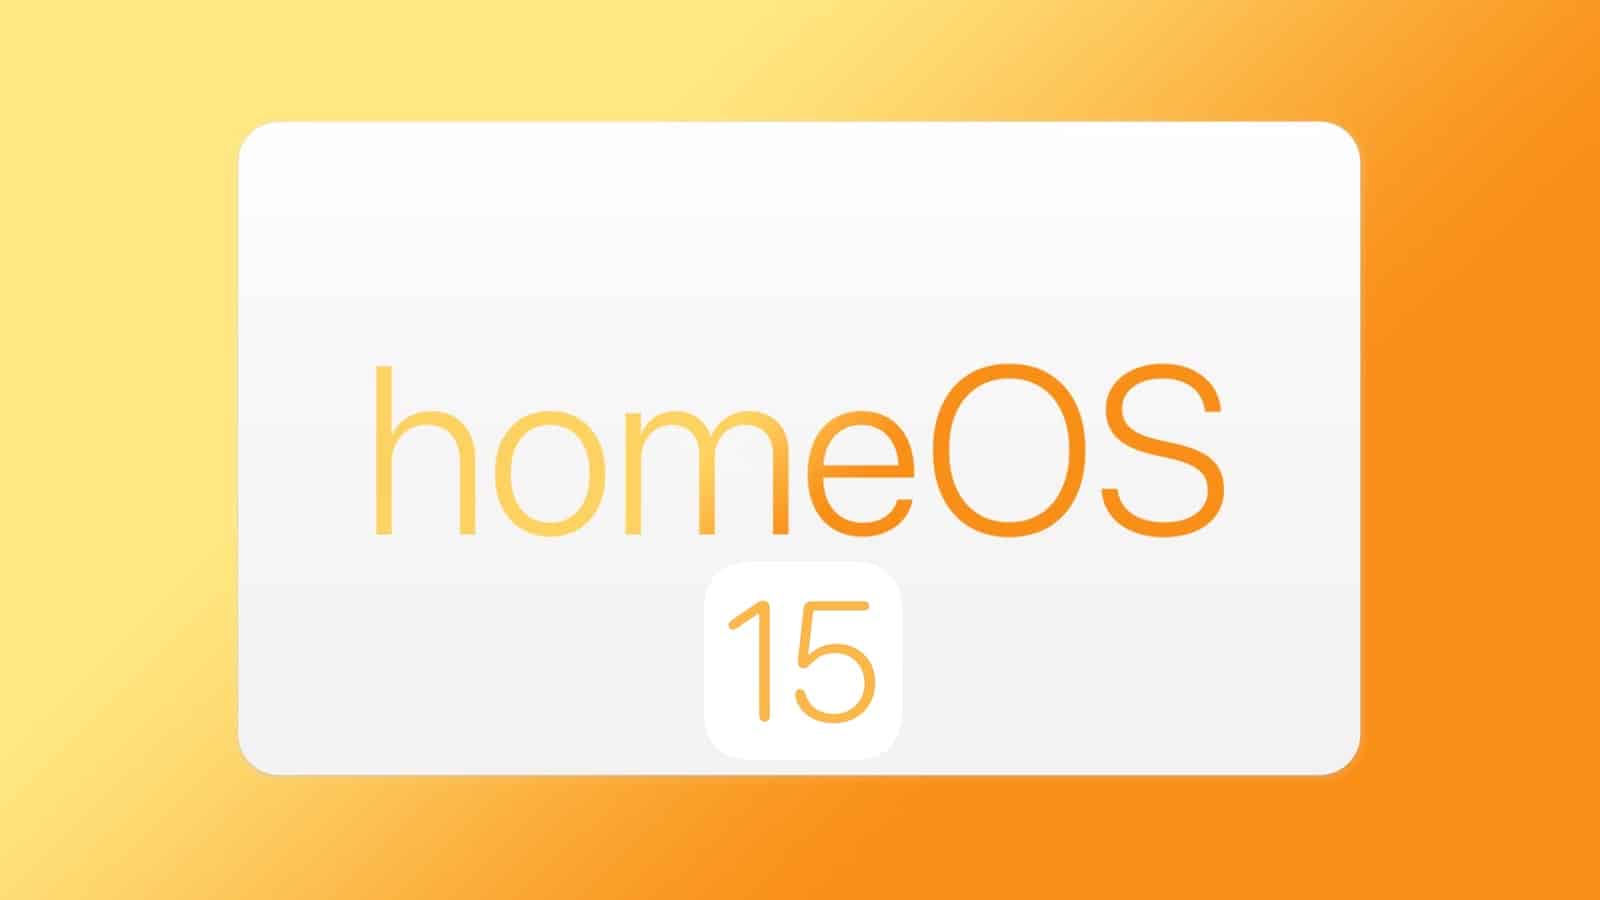 iOS 15, homeOS, 7 giugno 2021, WWDC 2021